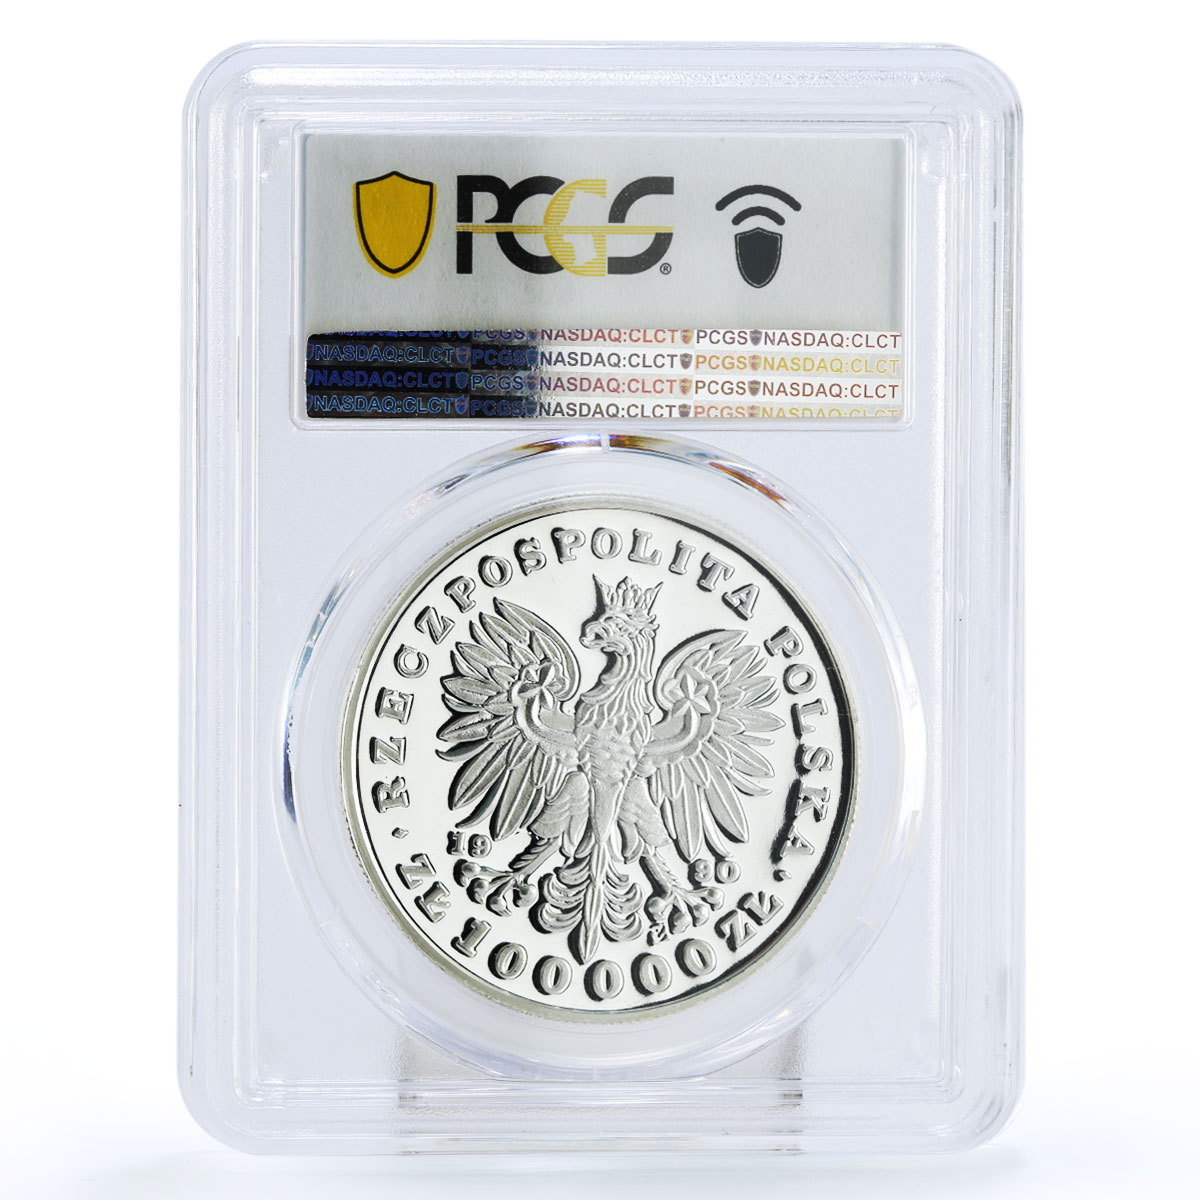 Poland 100 000 zlotych Tadeusz Kosciuszko PR69 PCGS silver coin 1990